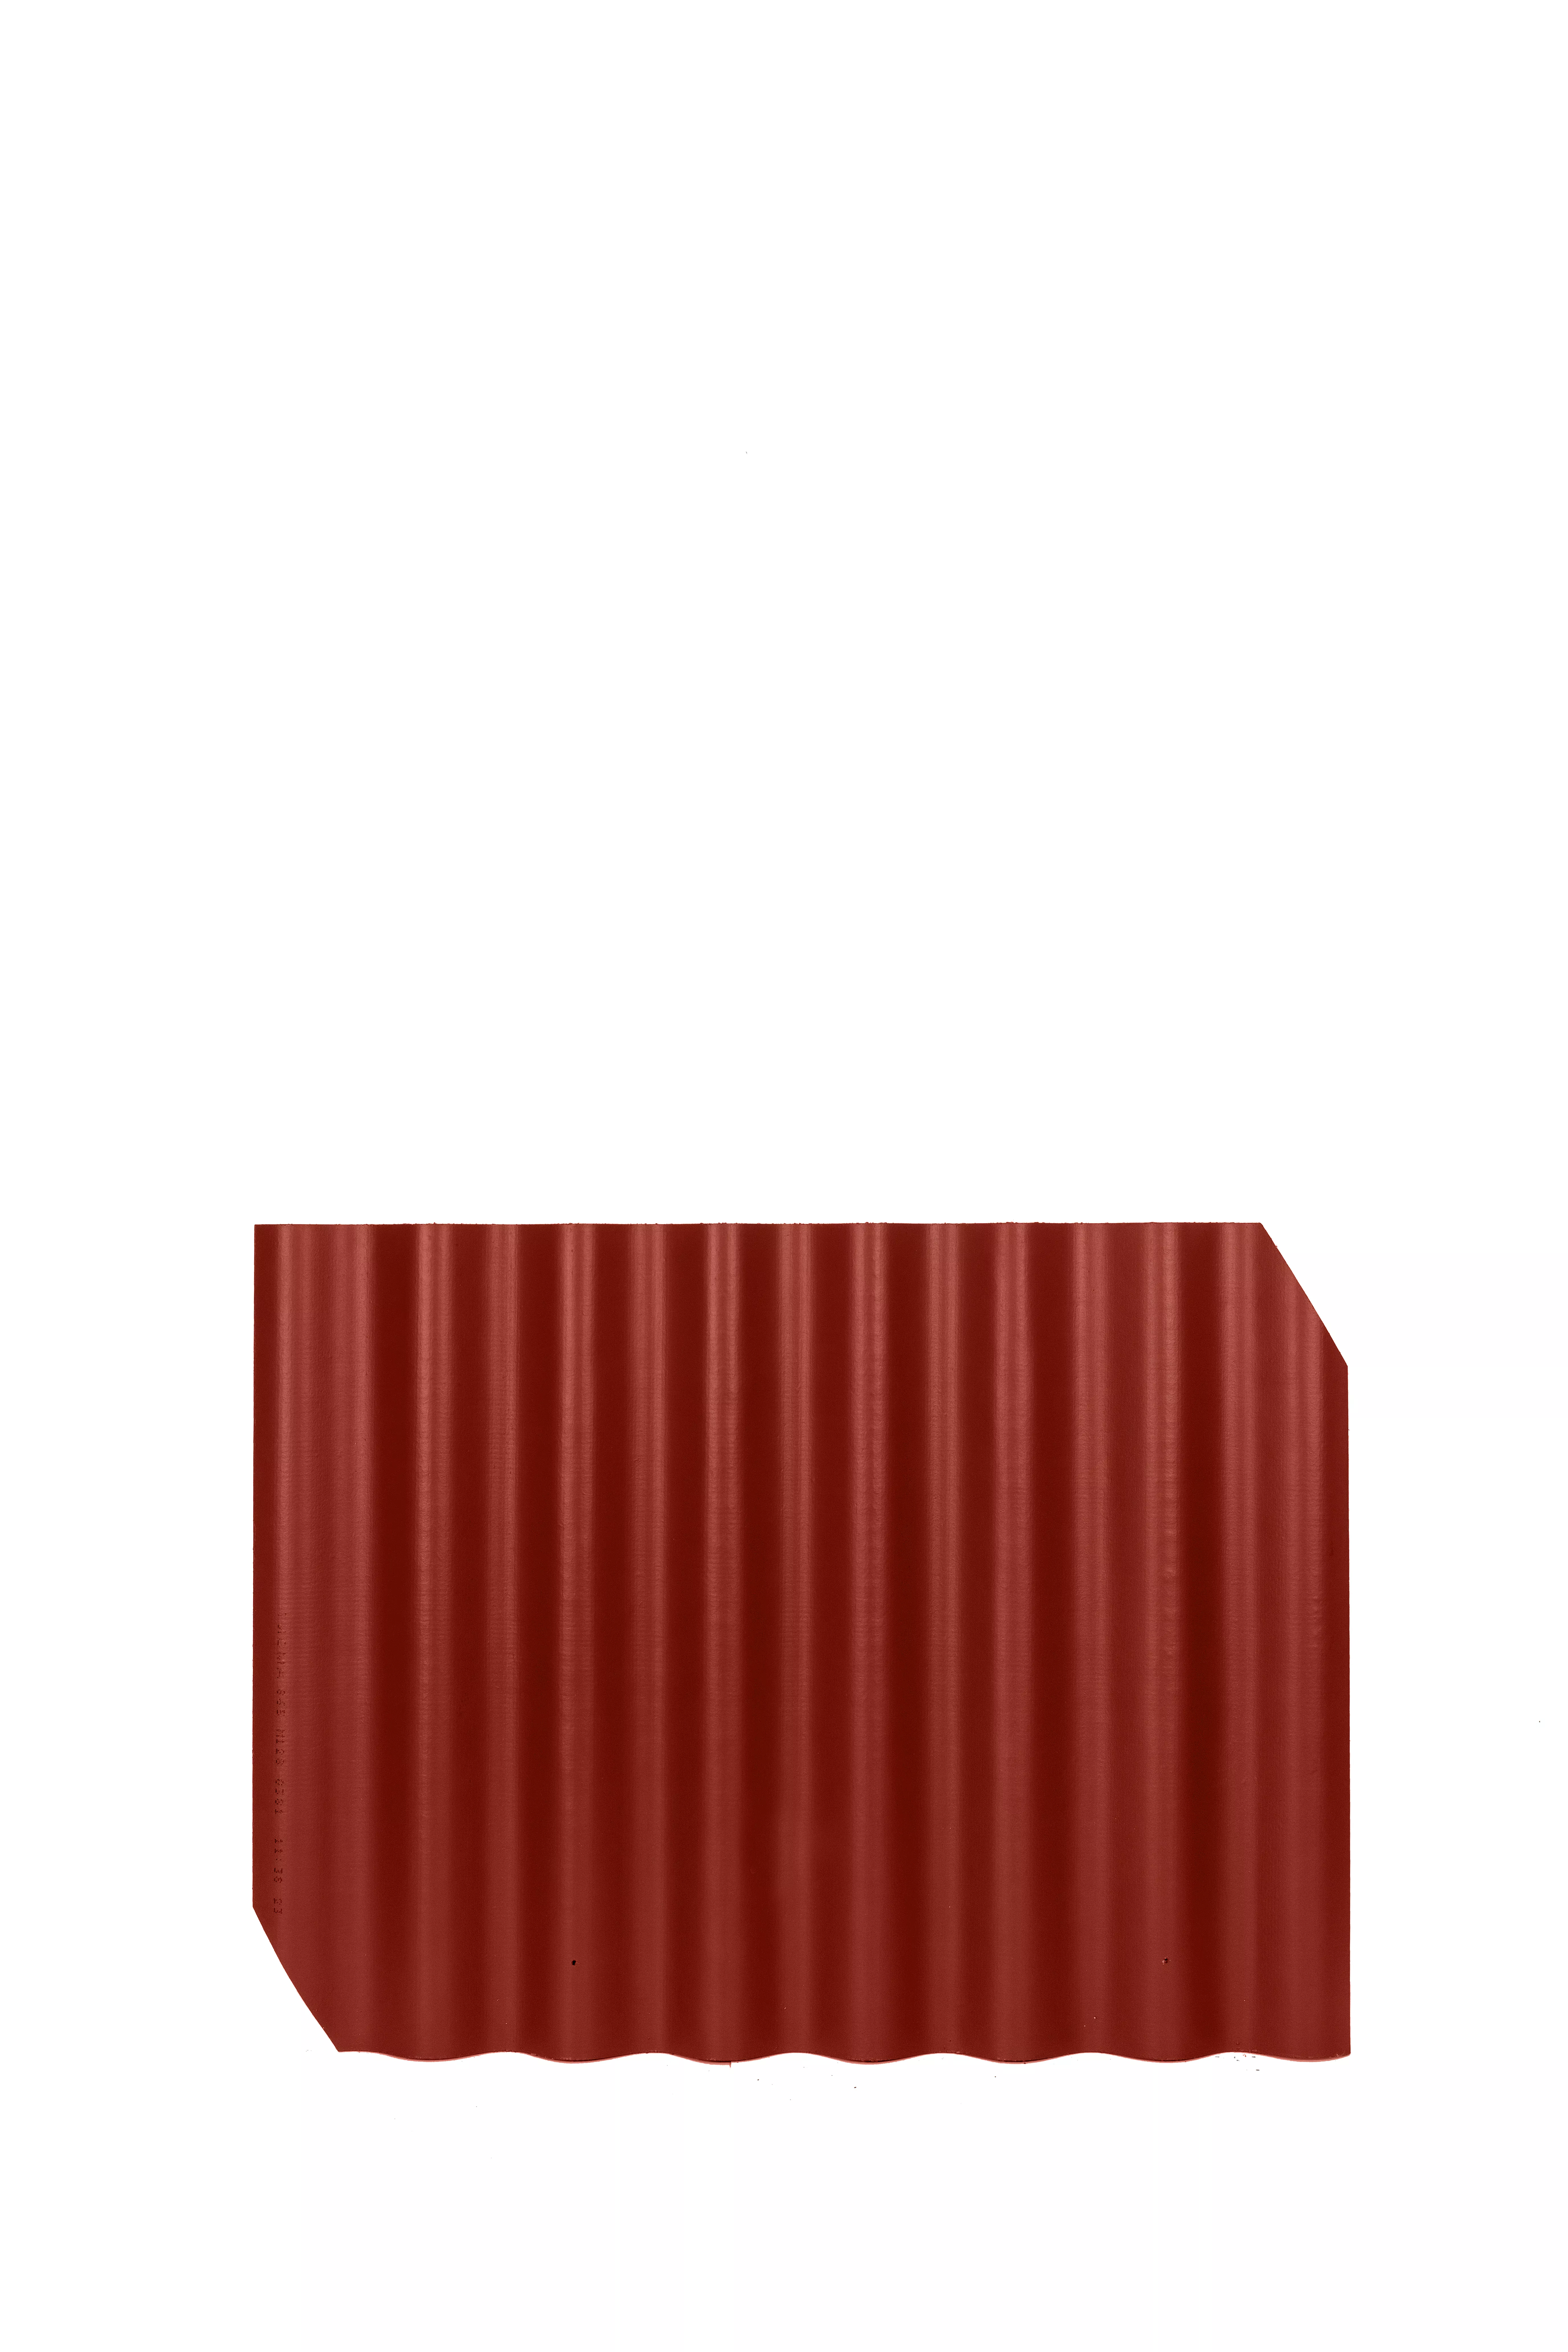 Черепица фиброцементная ТИСМА 40/150-8-865х1130х5,8 красный M128 ТУ